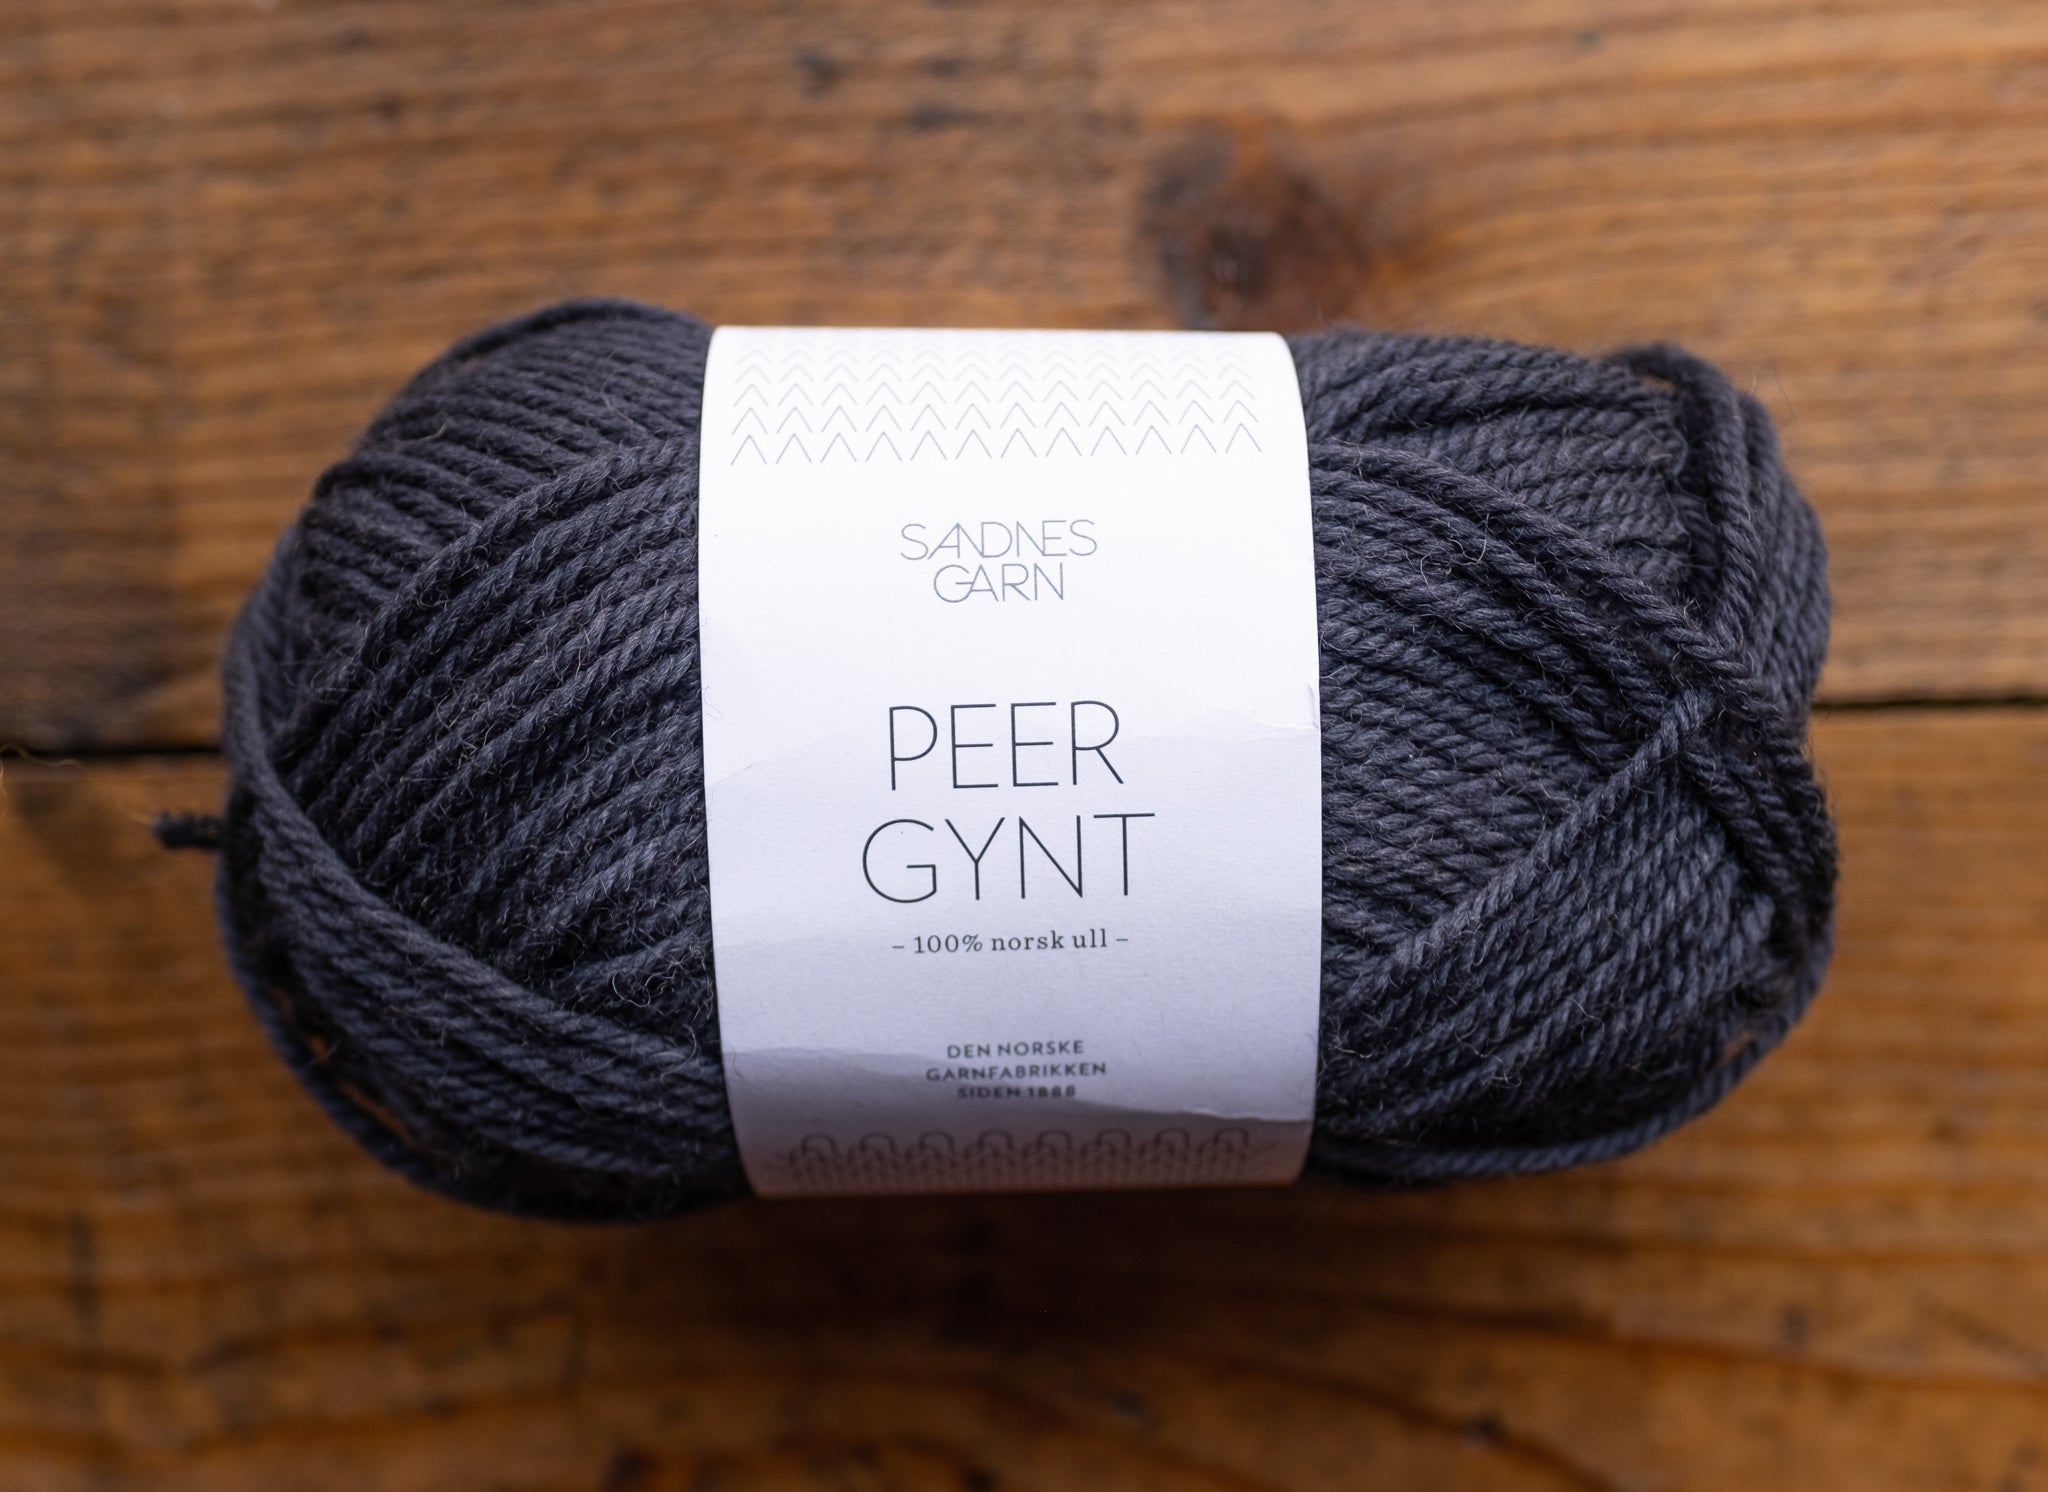 Sandnes Garn Peer Gynt – Galt House of Yarn